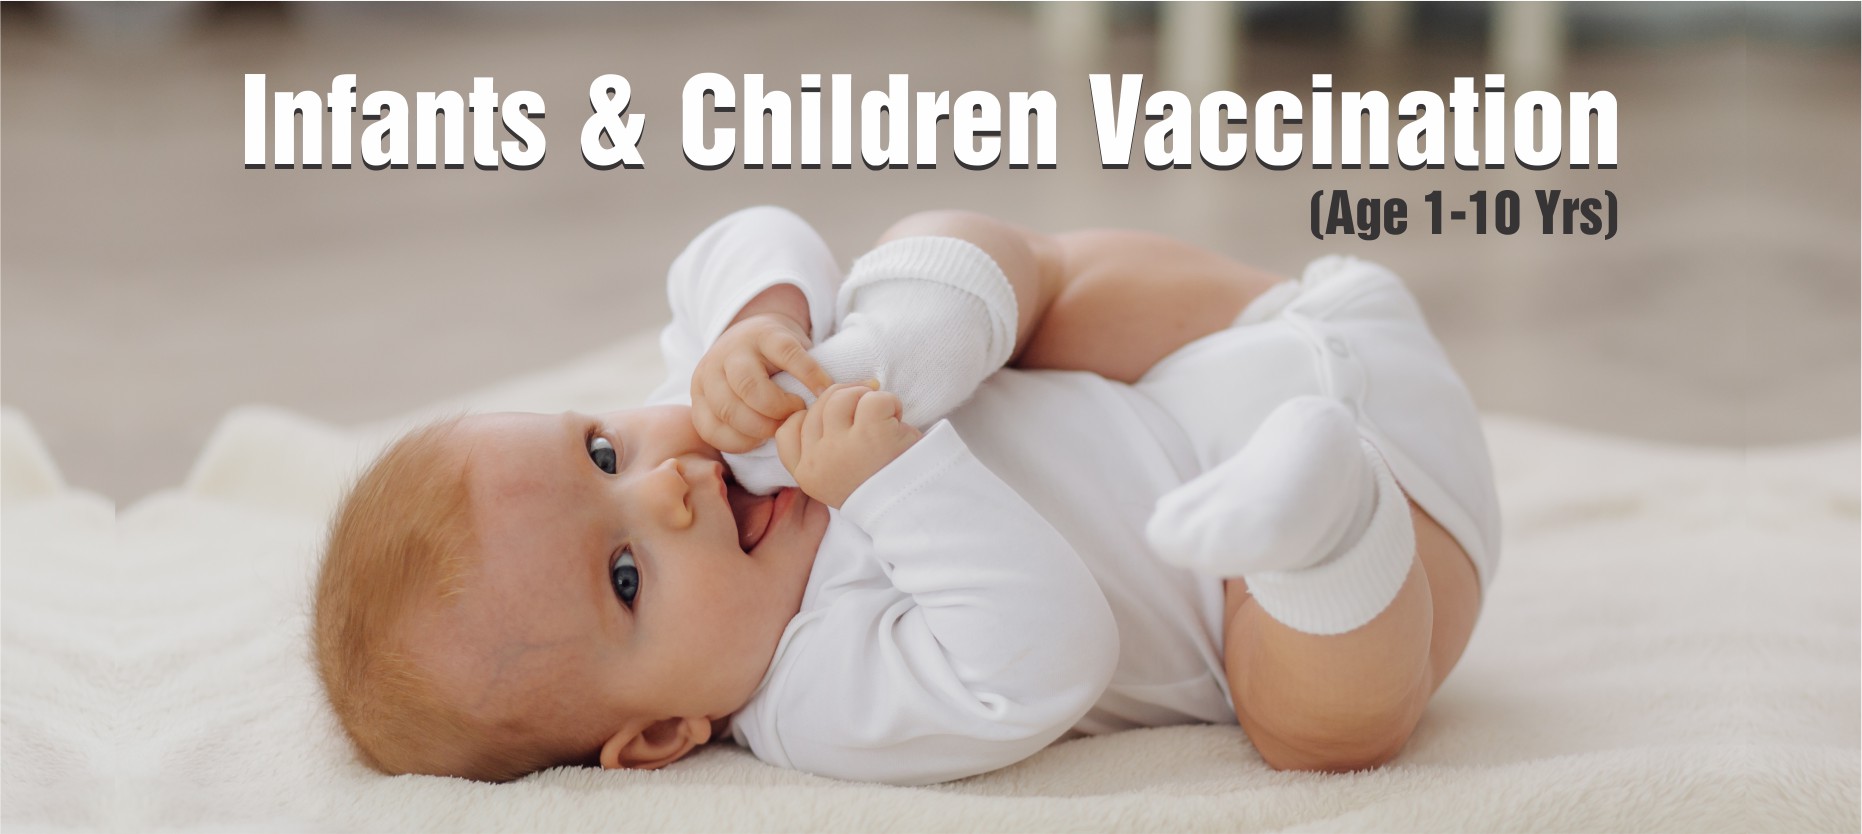 Infants & Children Vaccination